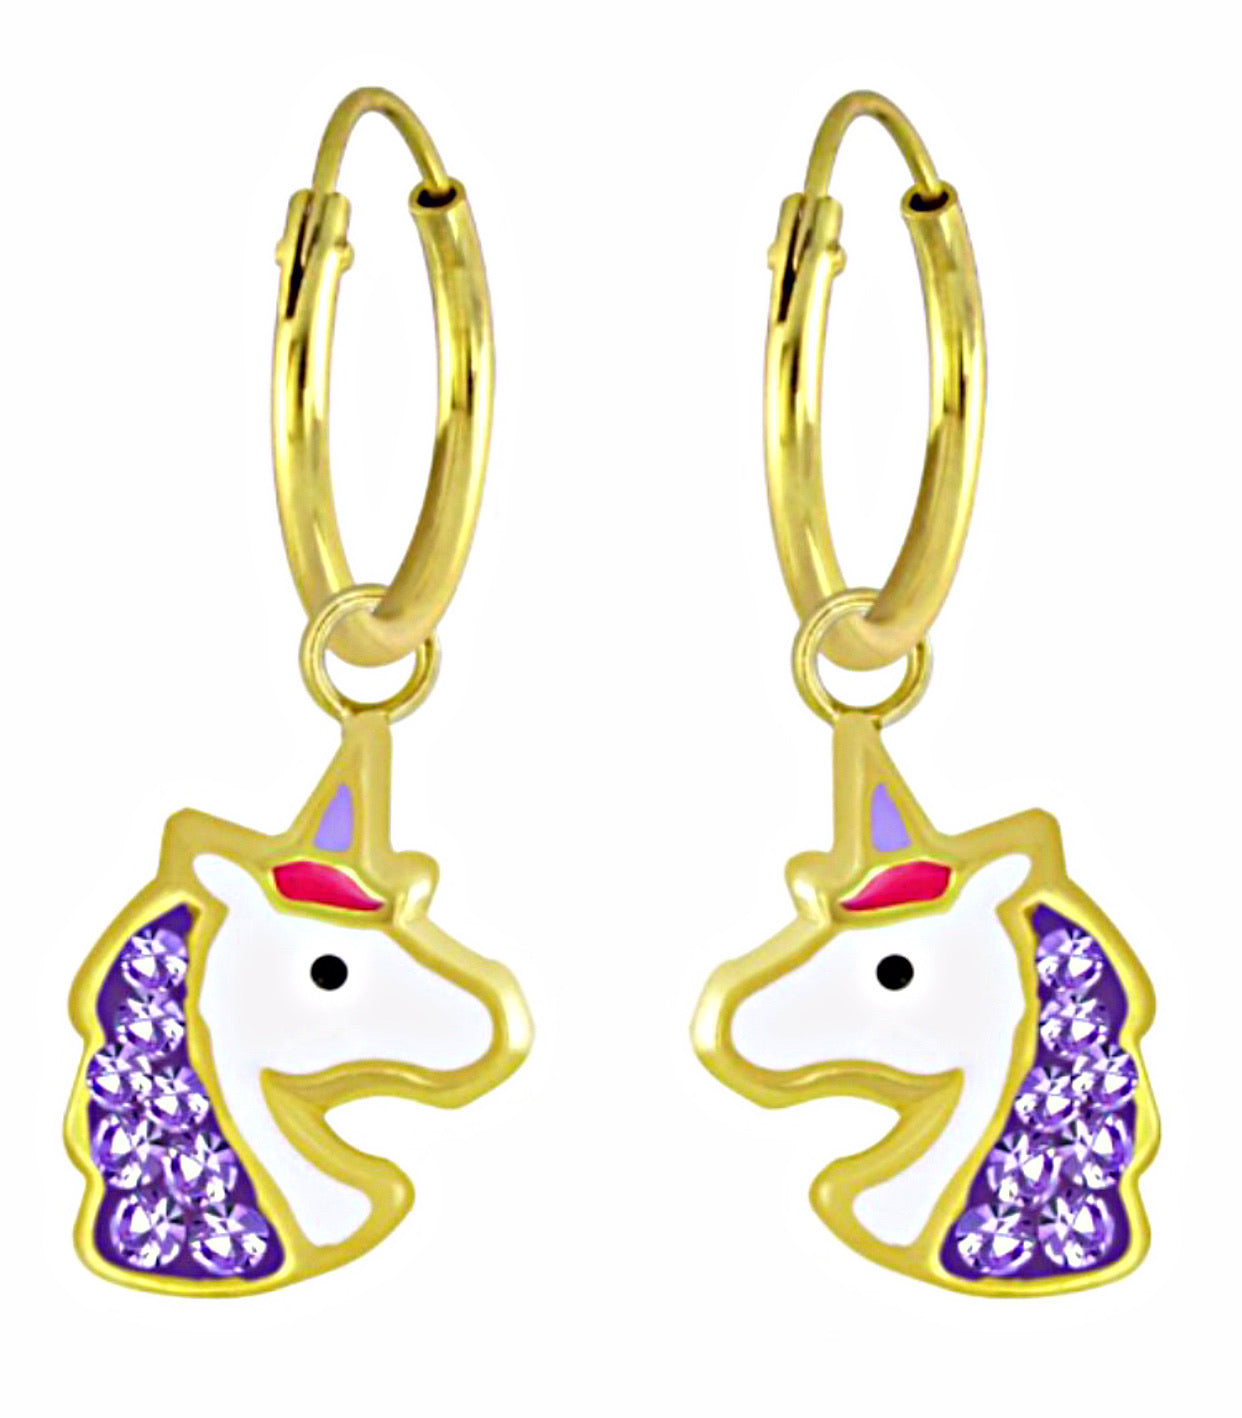 14K Gold Plated 925 Sterling Silver Crystal Unicorn Enamel Hoop Earrings For Kids, Teens - Forever Kids Jewelry